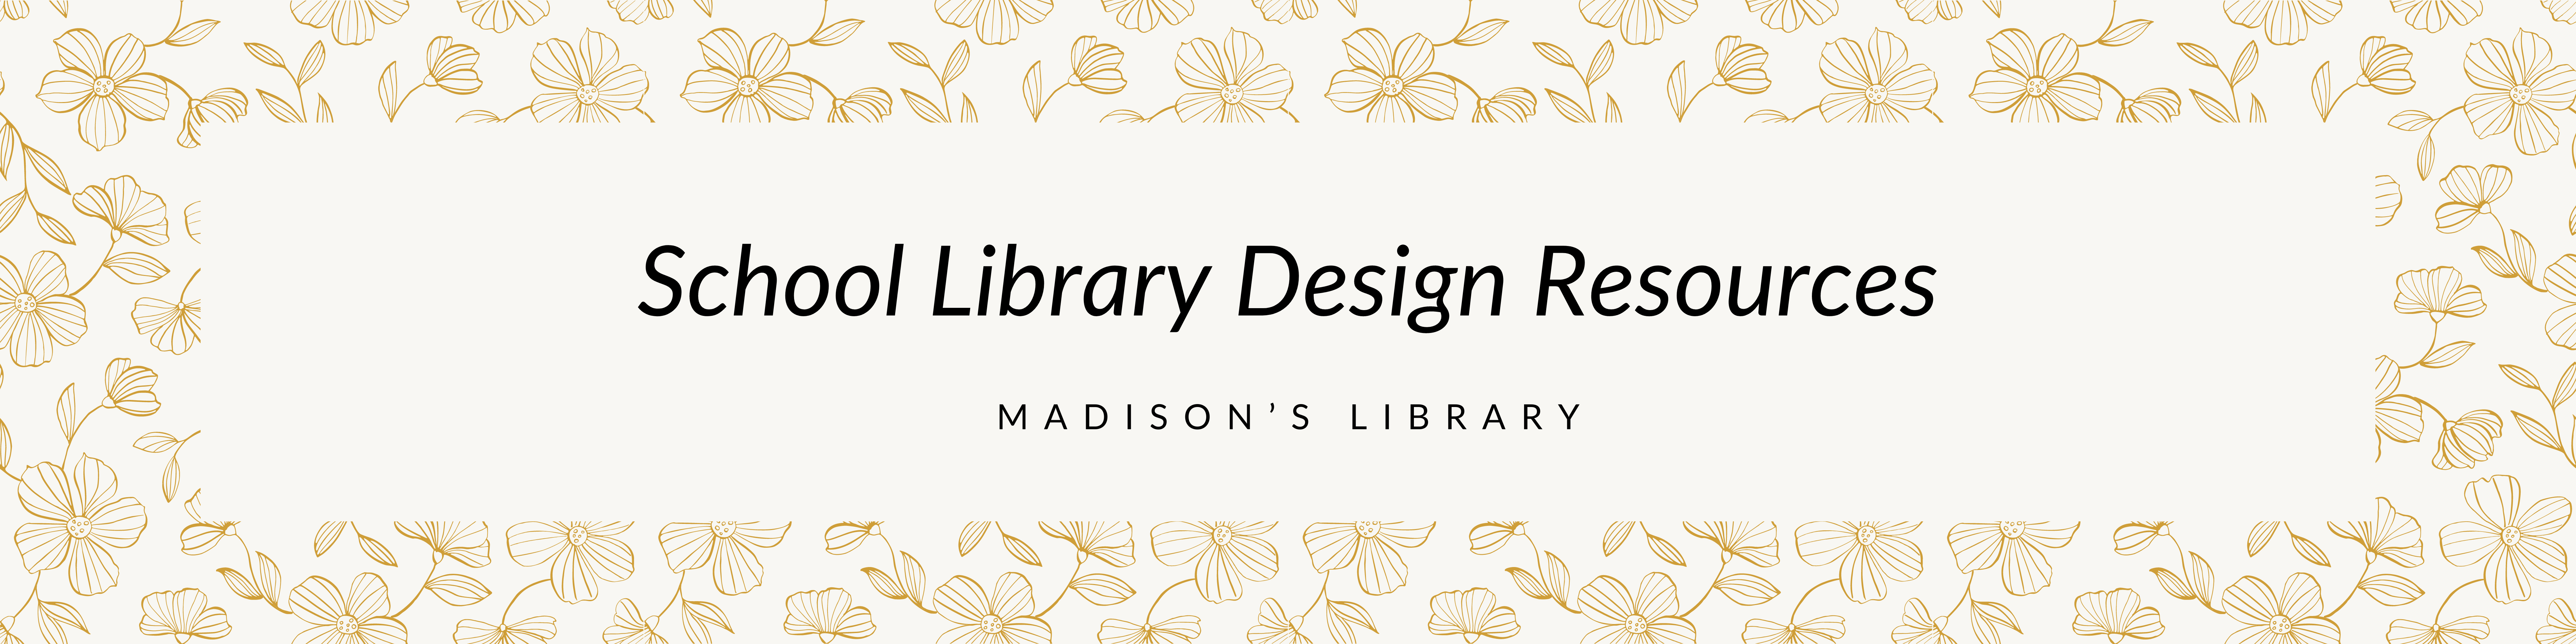 School library design resources